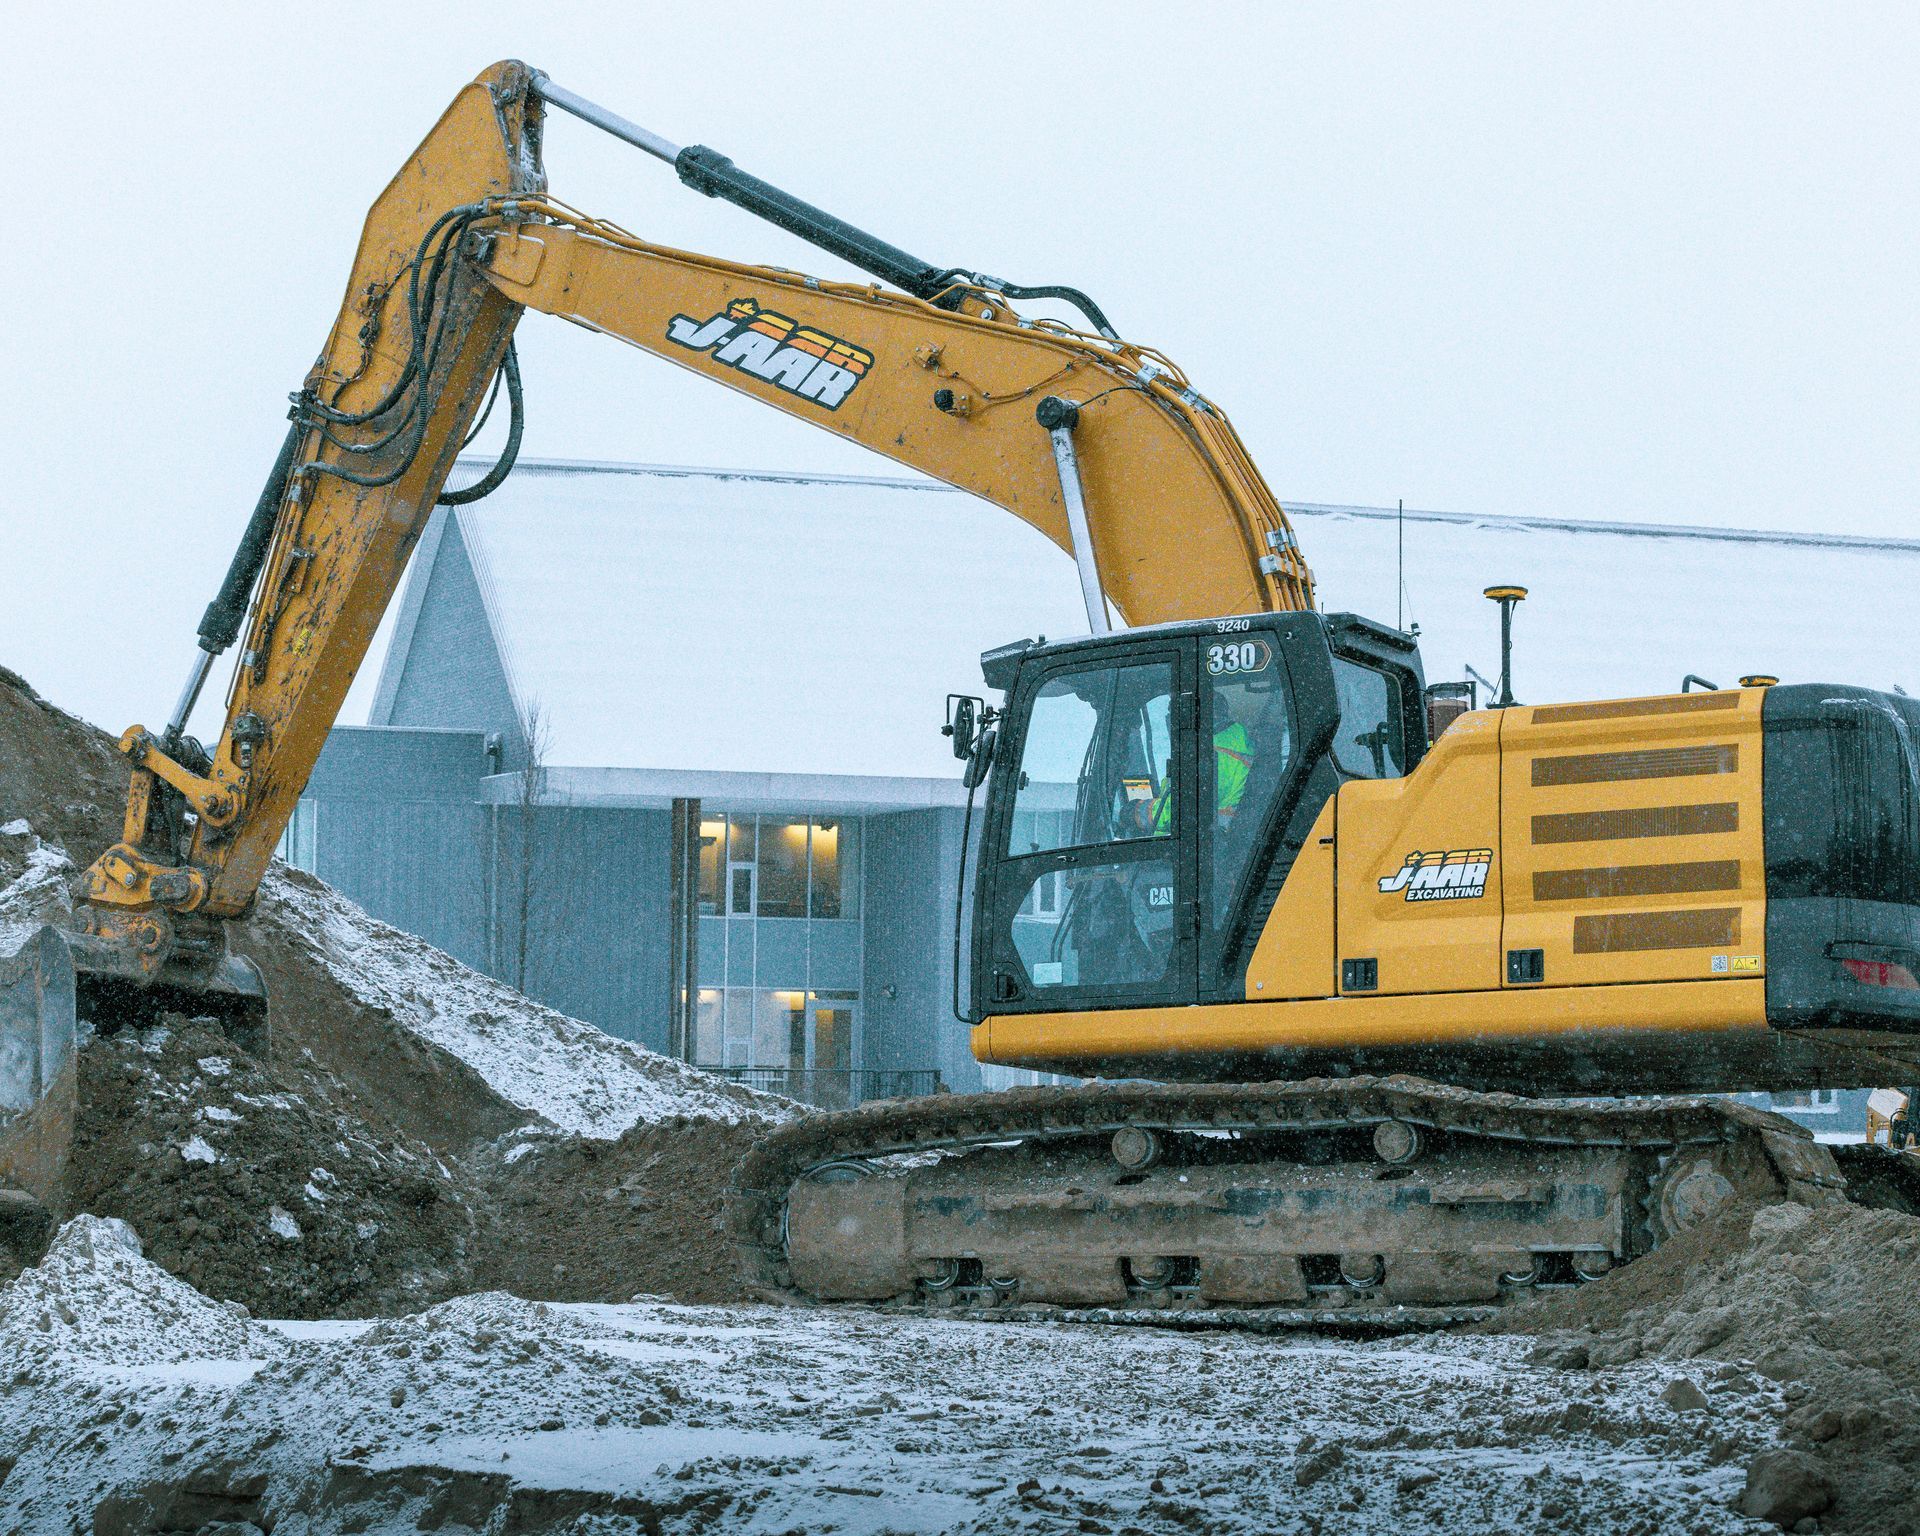 J-AAR large yellow excavator for Excavating Jobs 